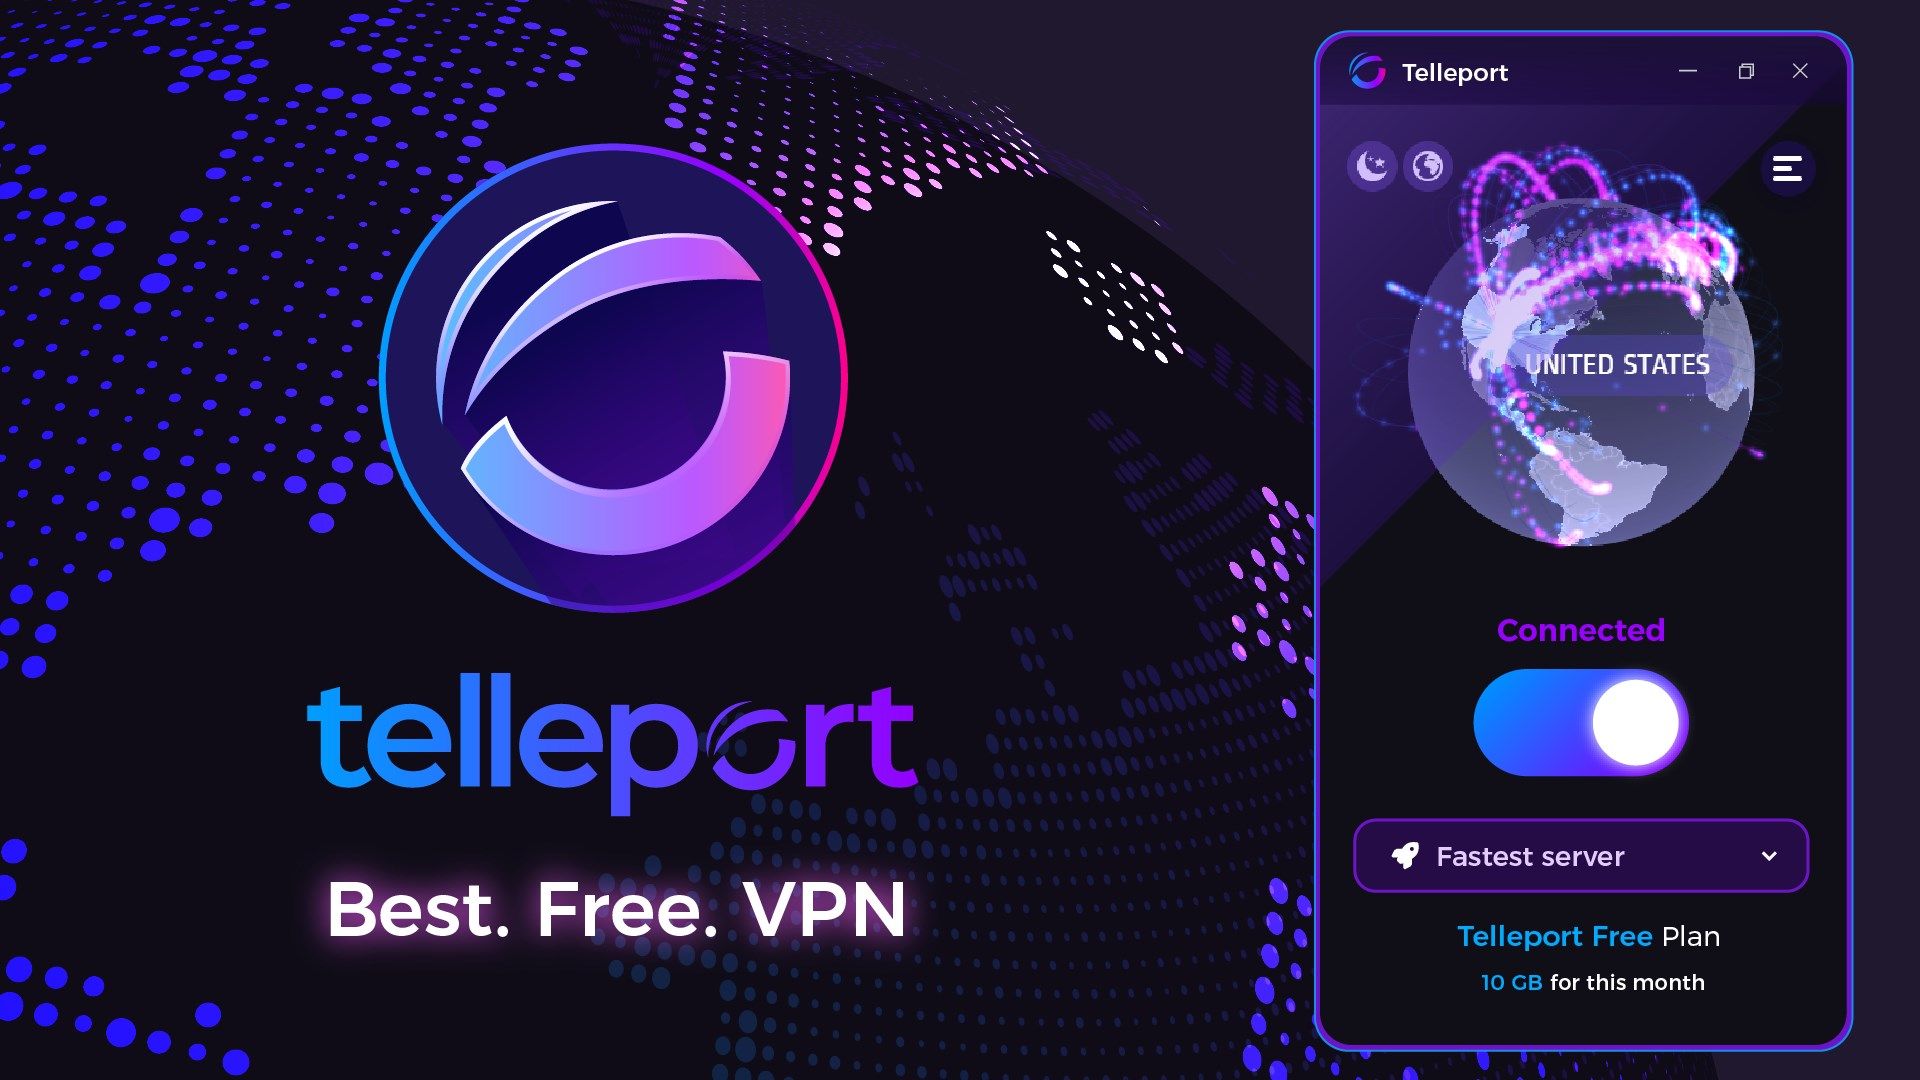 Telleport - Best Free VPN